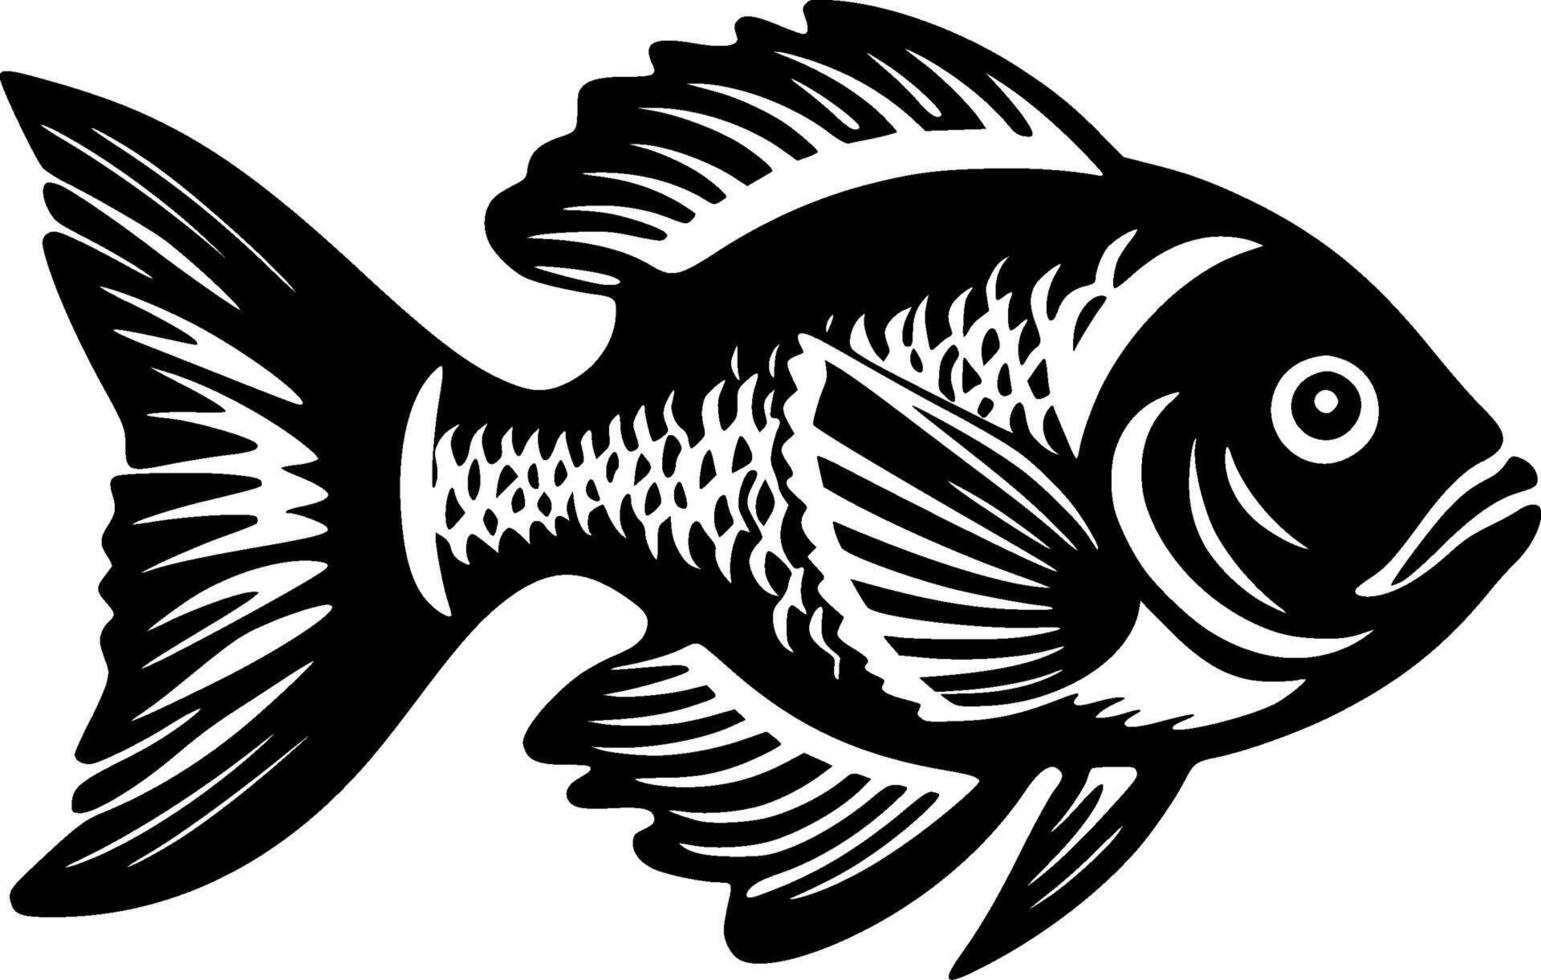 Fish, Minimalist and Simple Silhouette - illustration vector